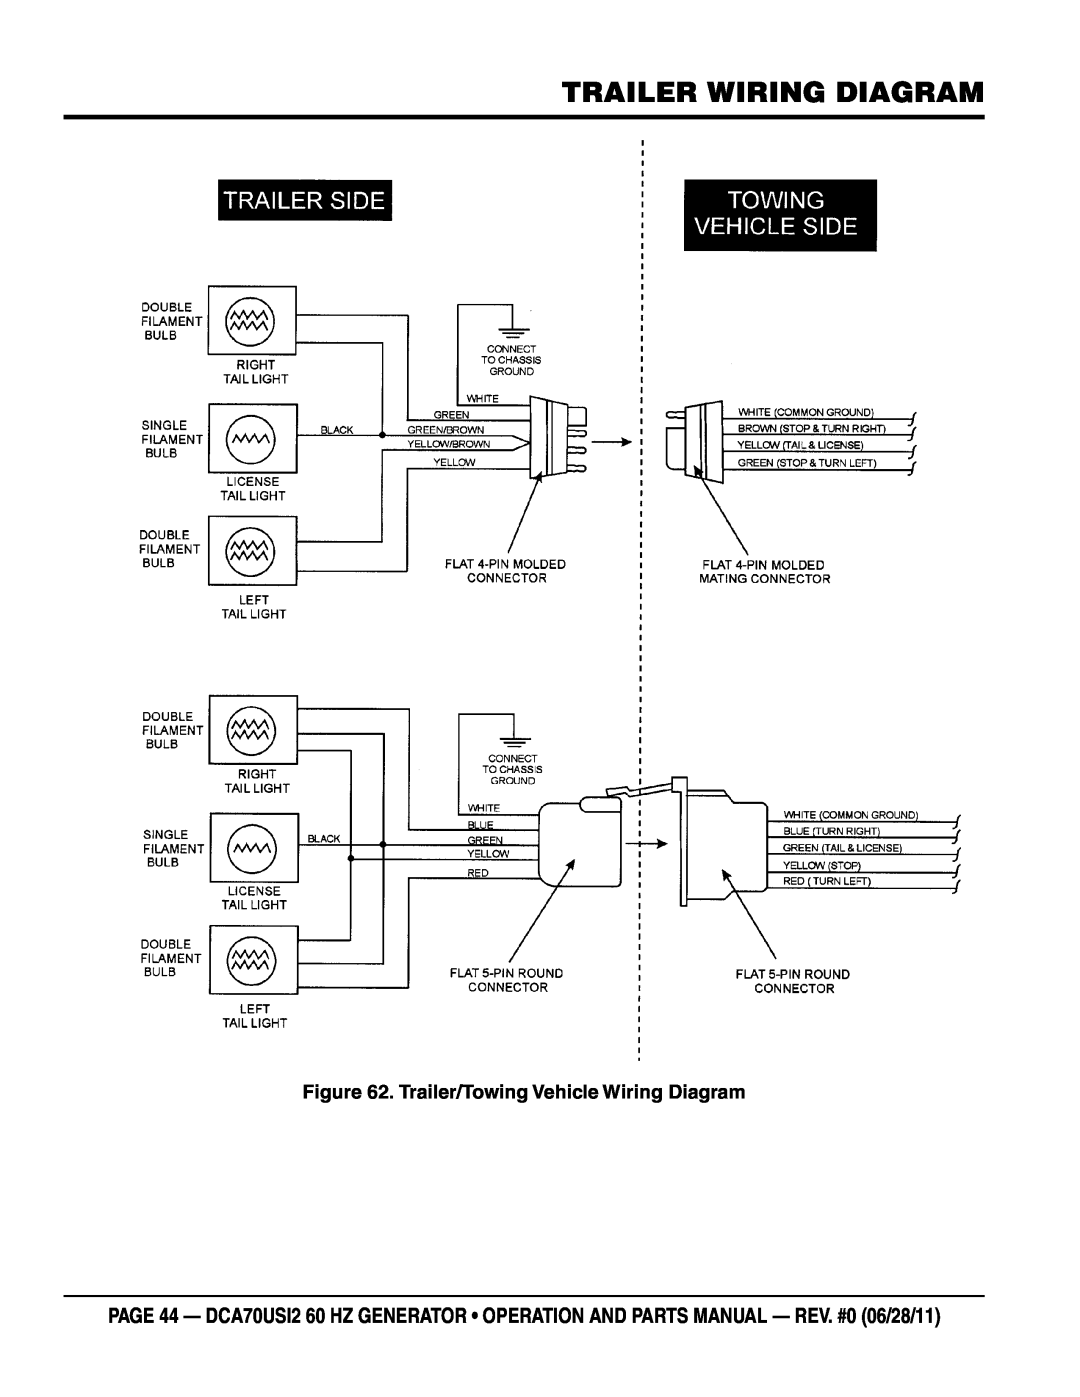 Multiquip DCA70USI2 manual Trailer Wiring Diagram, Trailer/Towing Vehicle Wiring Diagram 